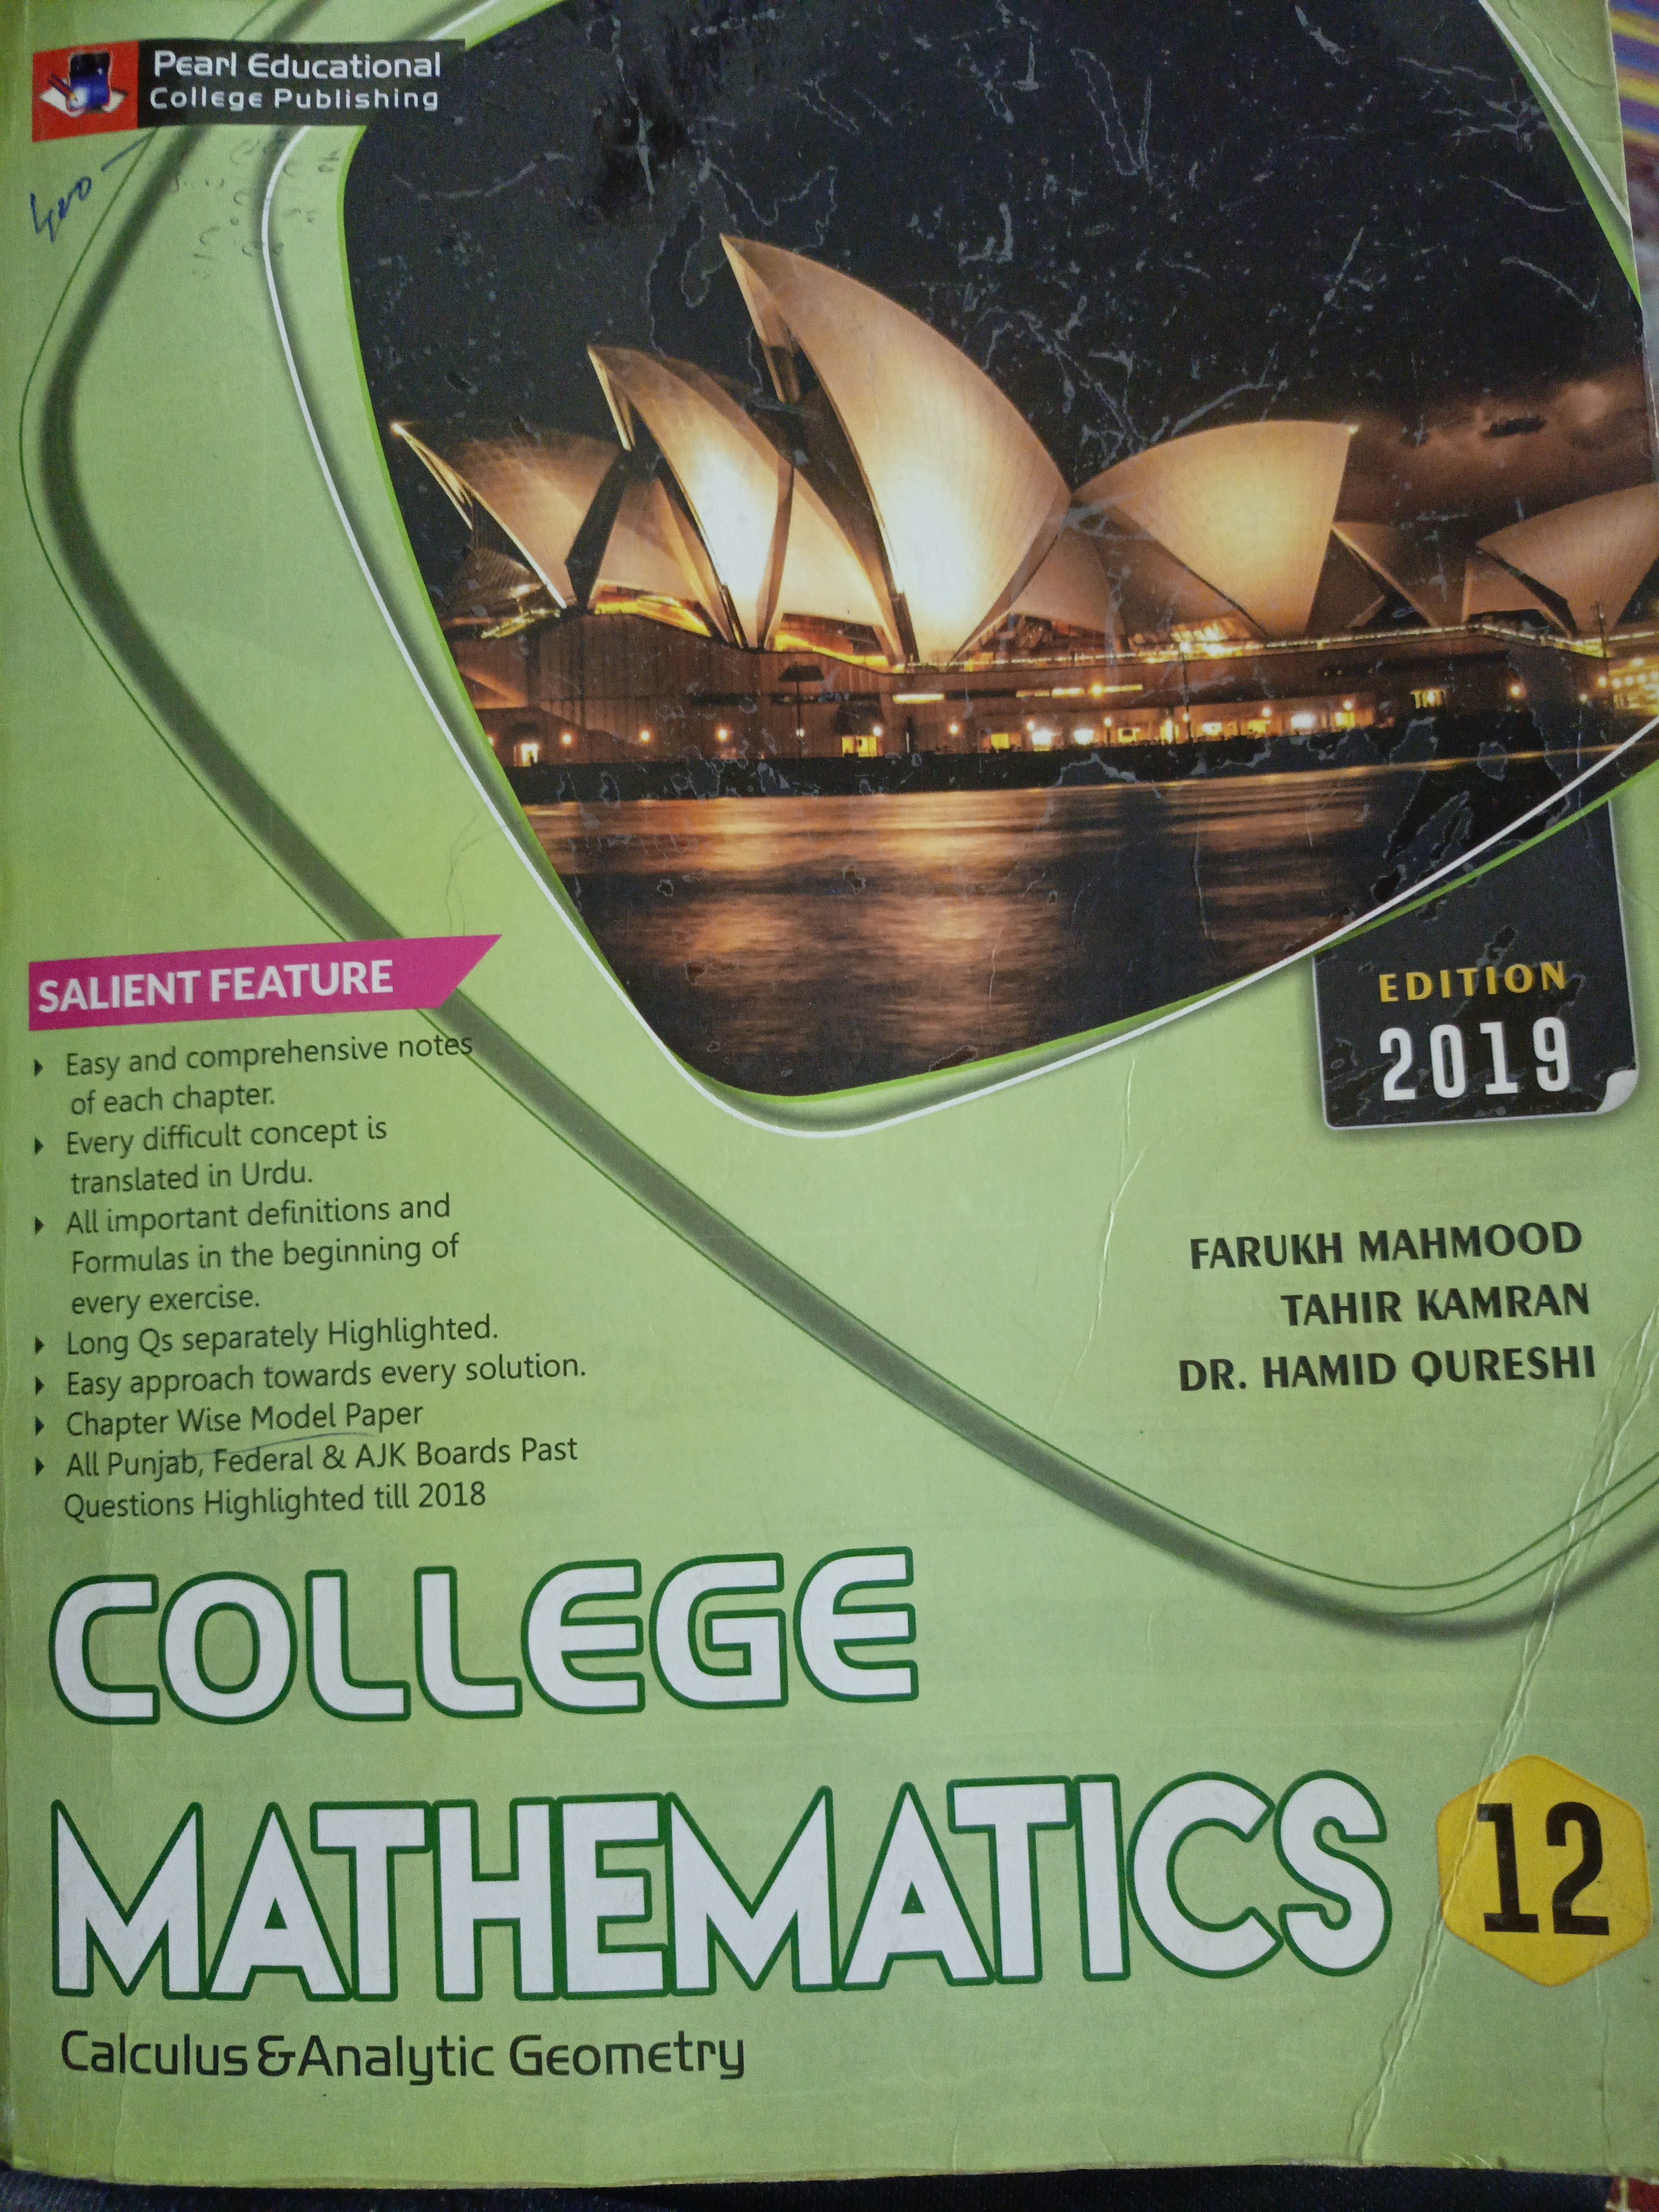 College mathematics guide